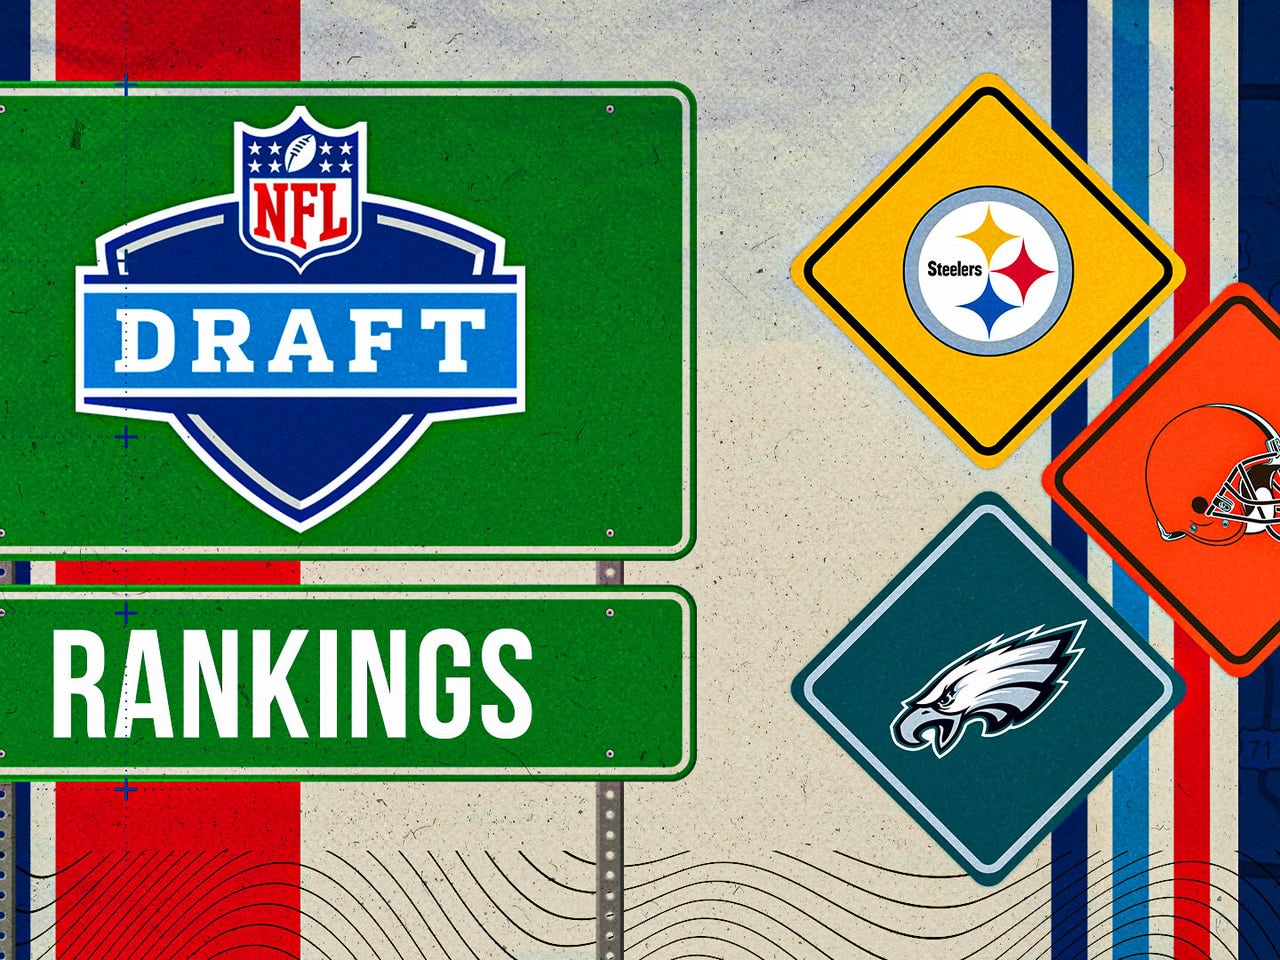 Browns 2022 NFL draft capital ranked ninth best